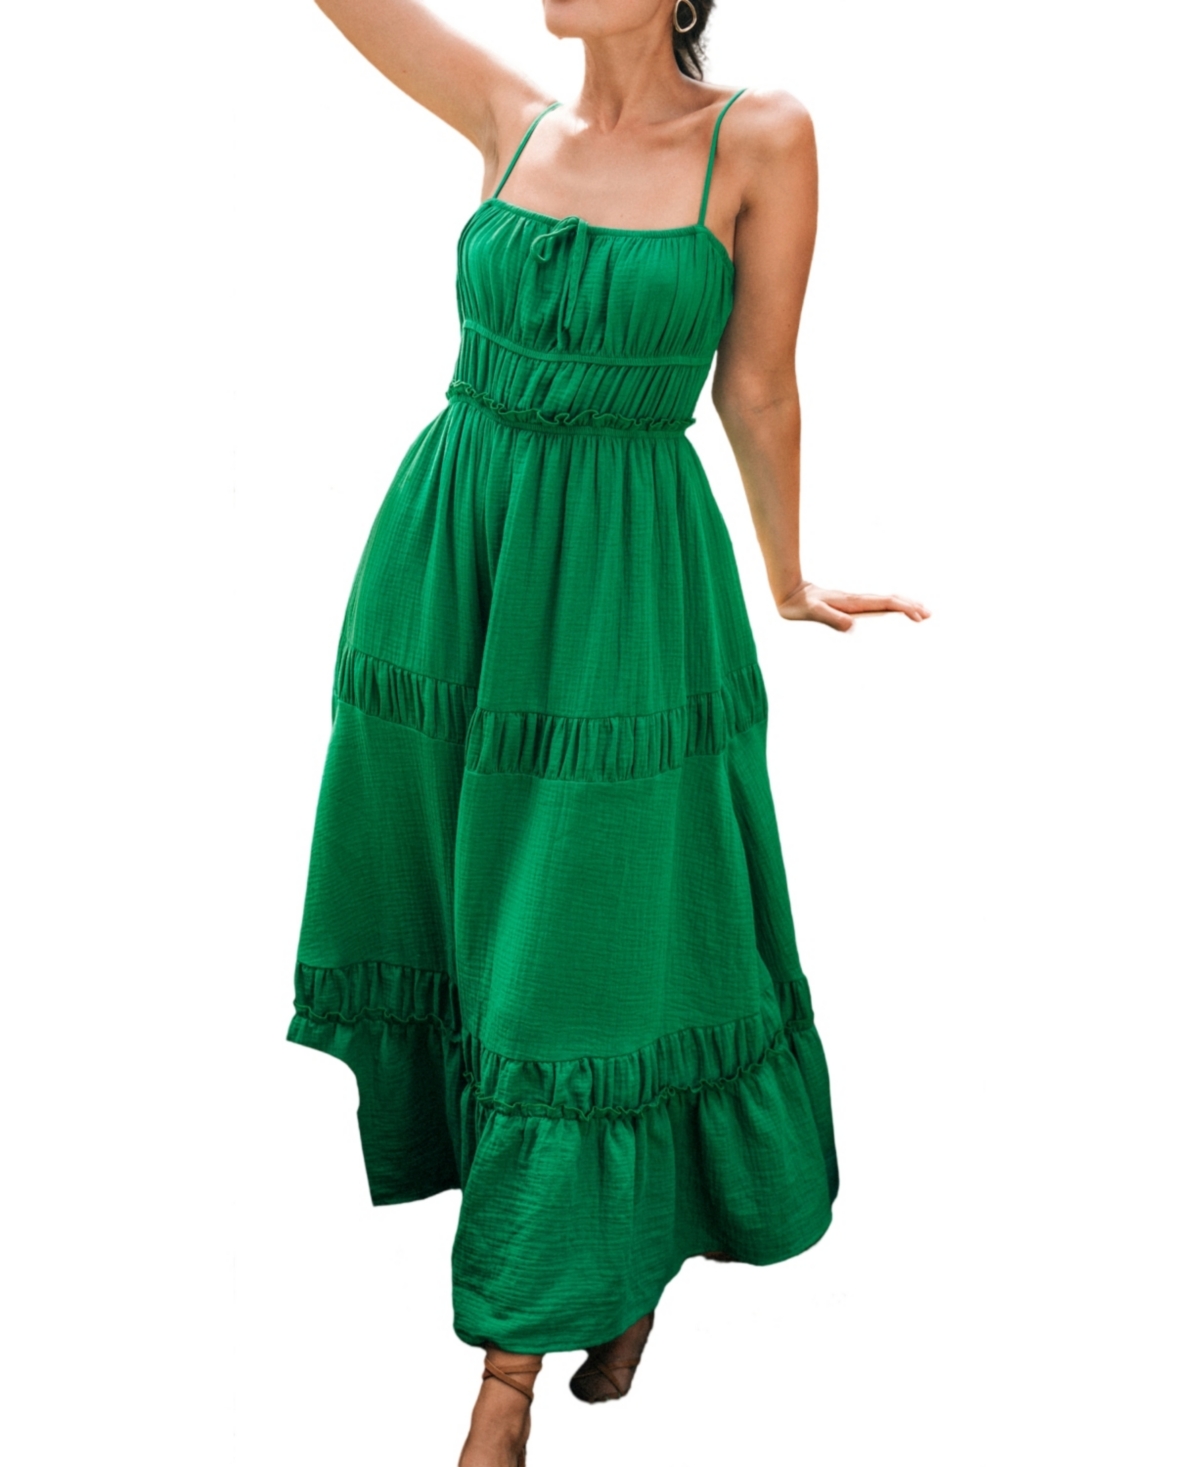 Women's Green Sleeveless Square Neck Maxi Beach Dress - Light/pastel green